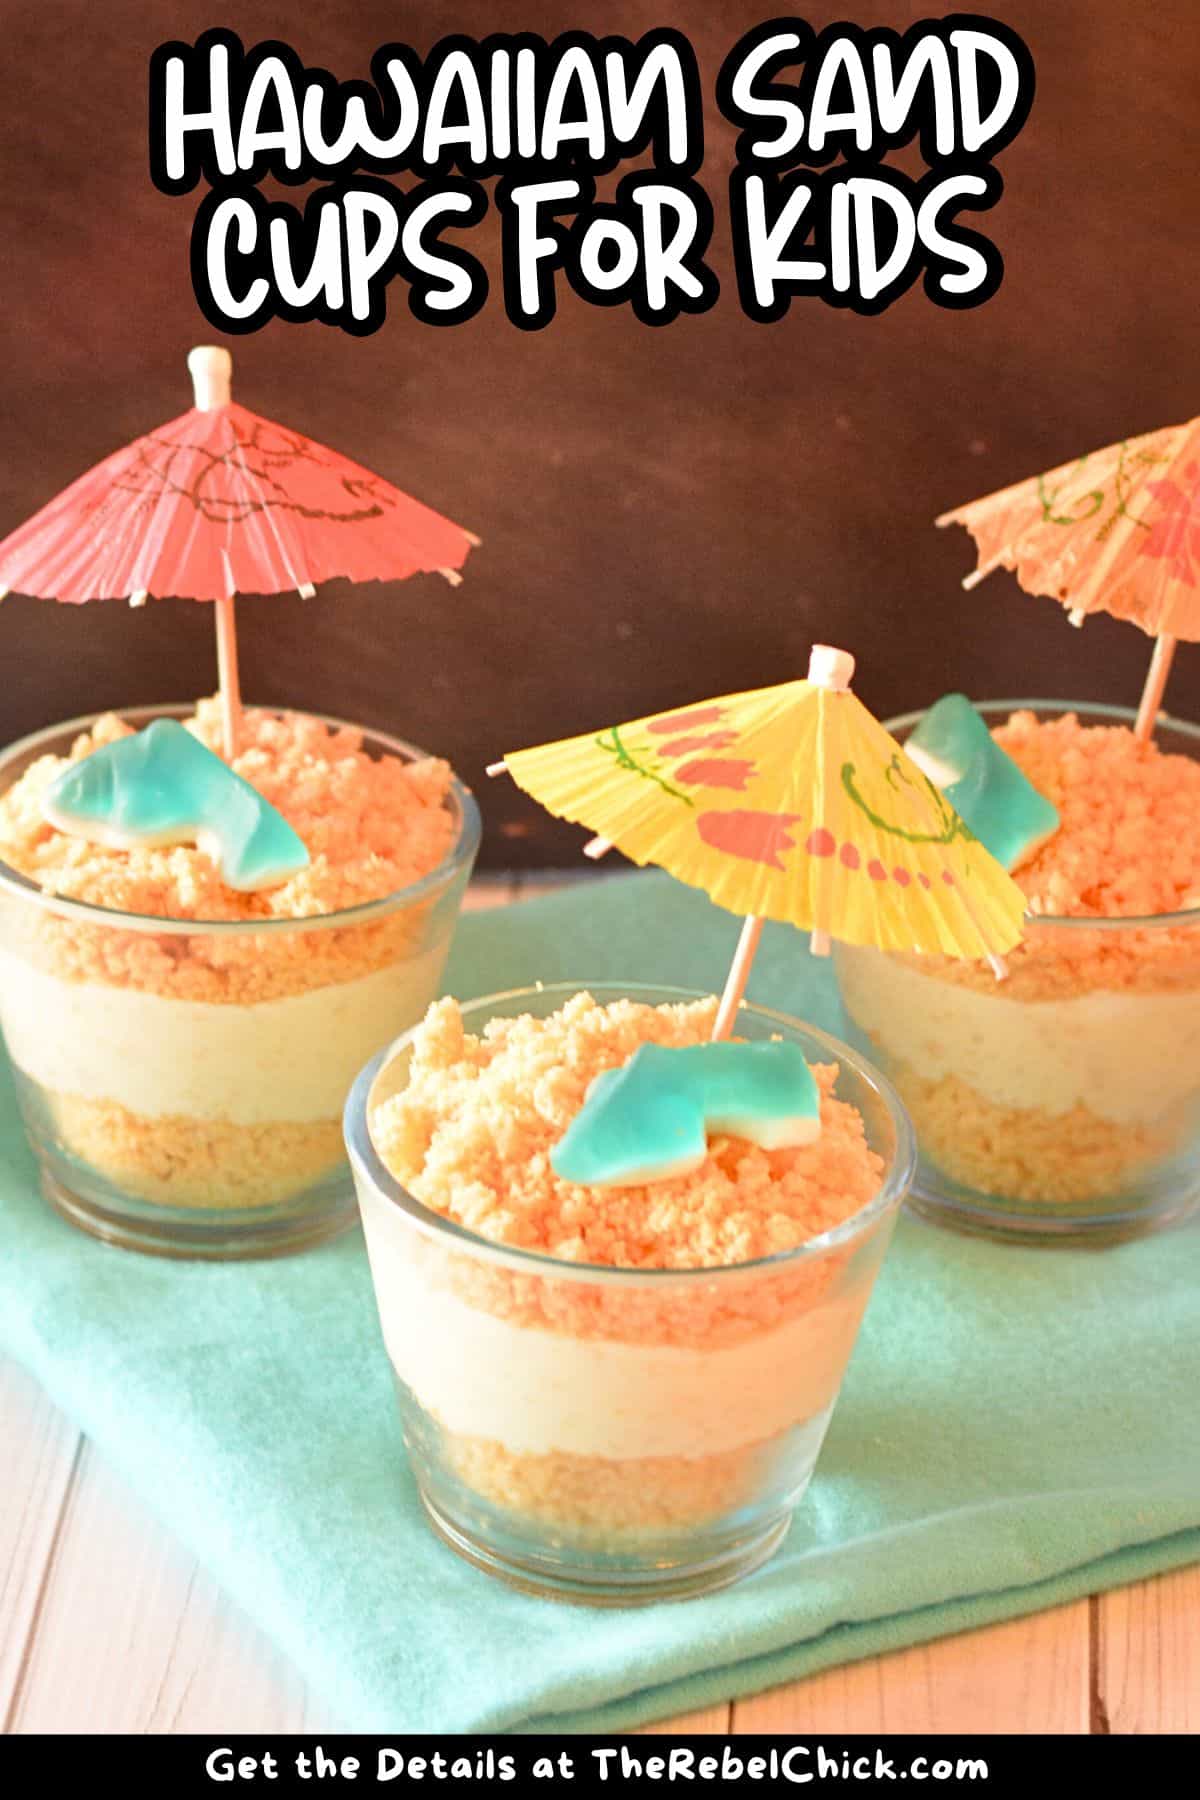 Hawaiian Desserts sand cups for kids